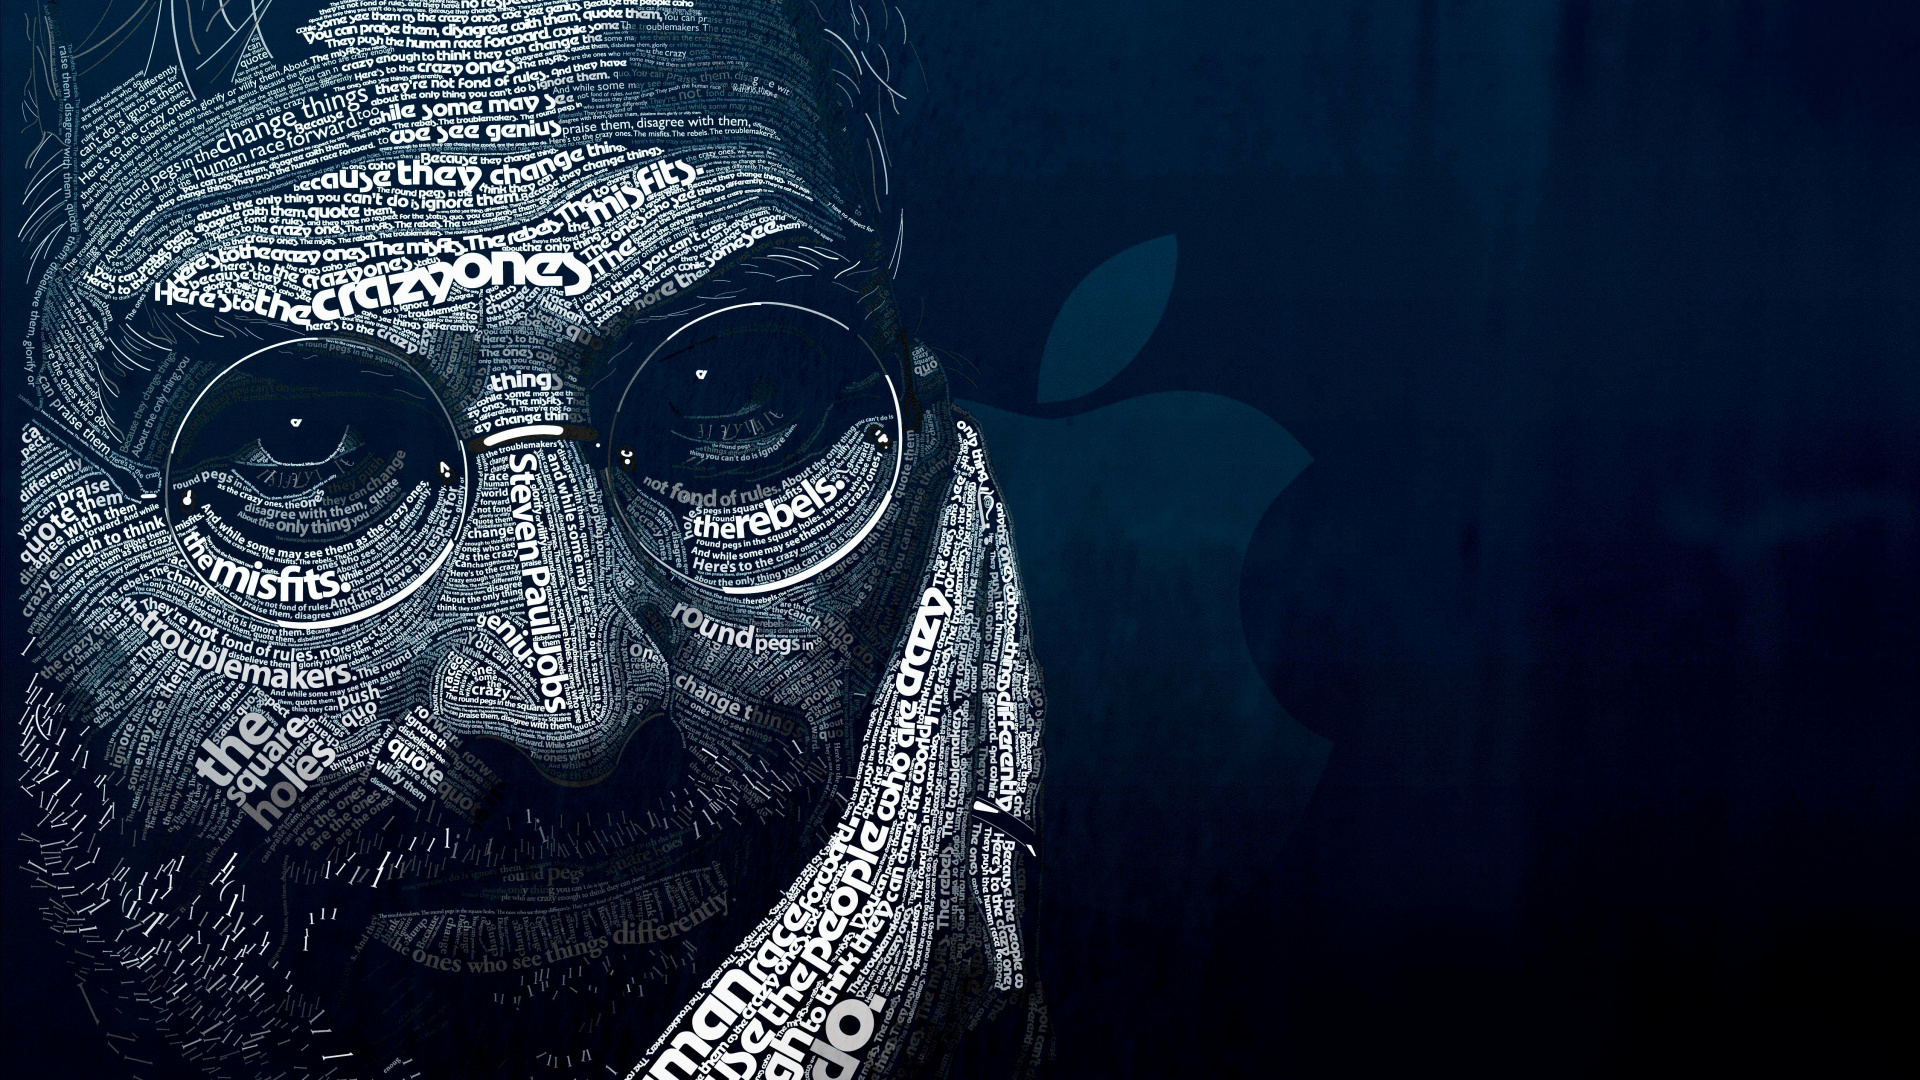 Steve Jobs, Apple, Darkness, Masque, Ipod. Wallpaper in 1920x1080 Resolution